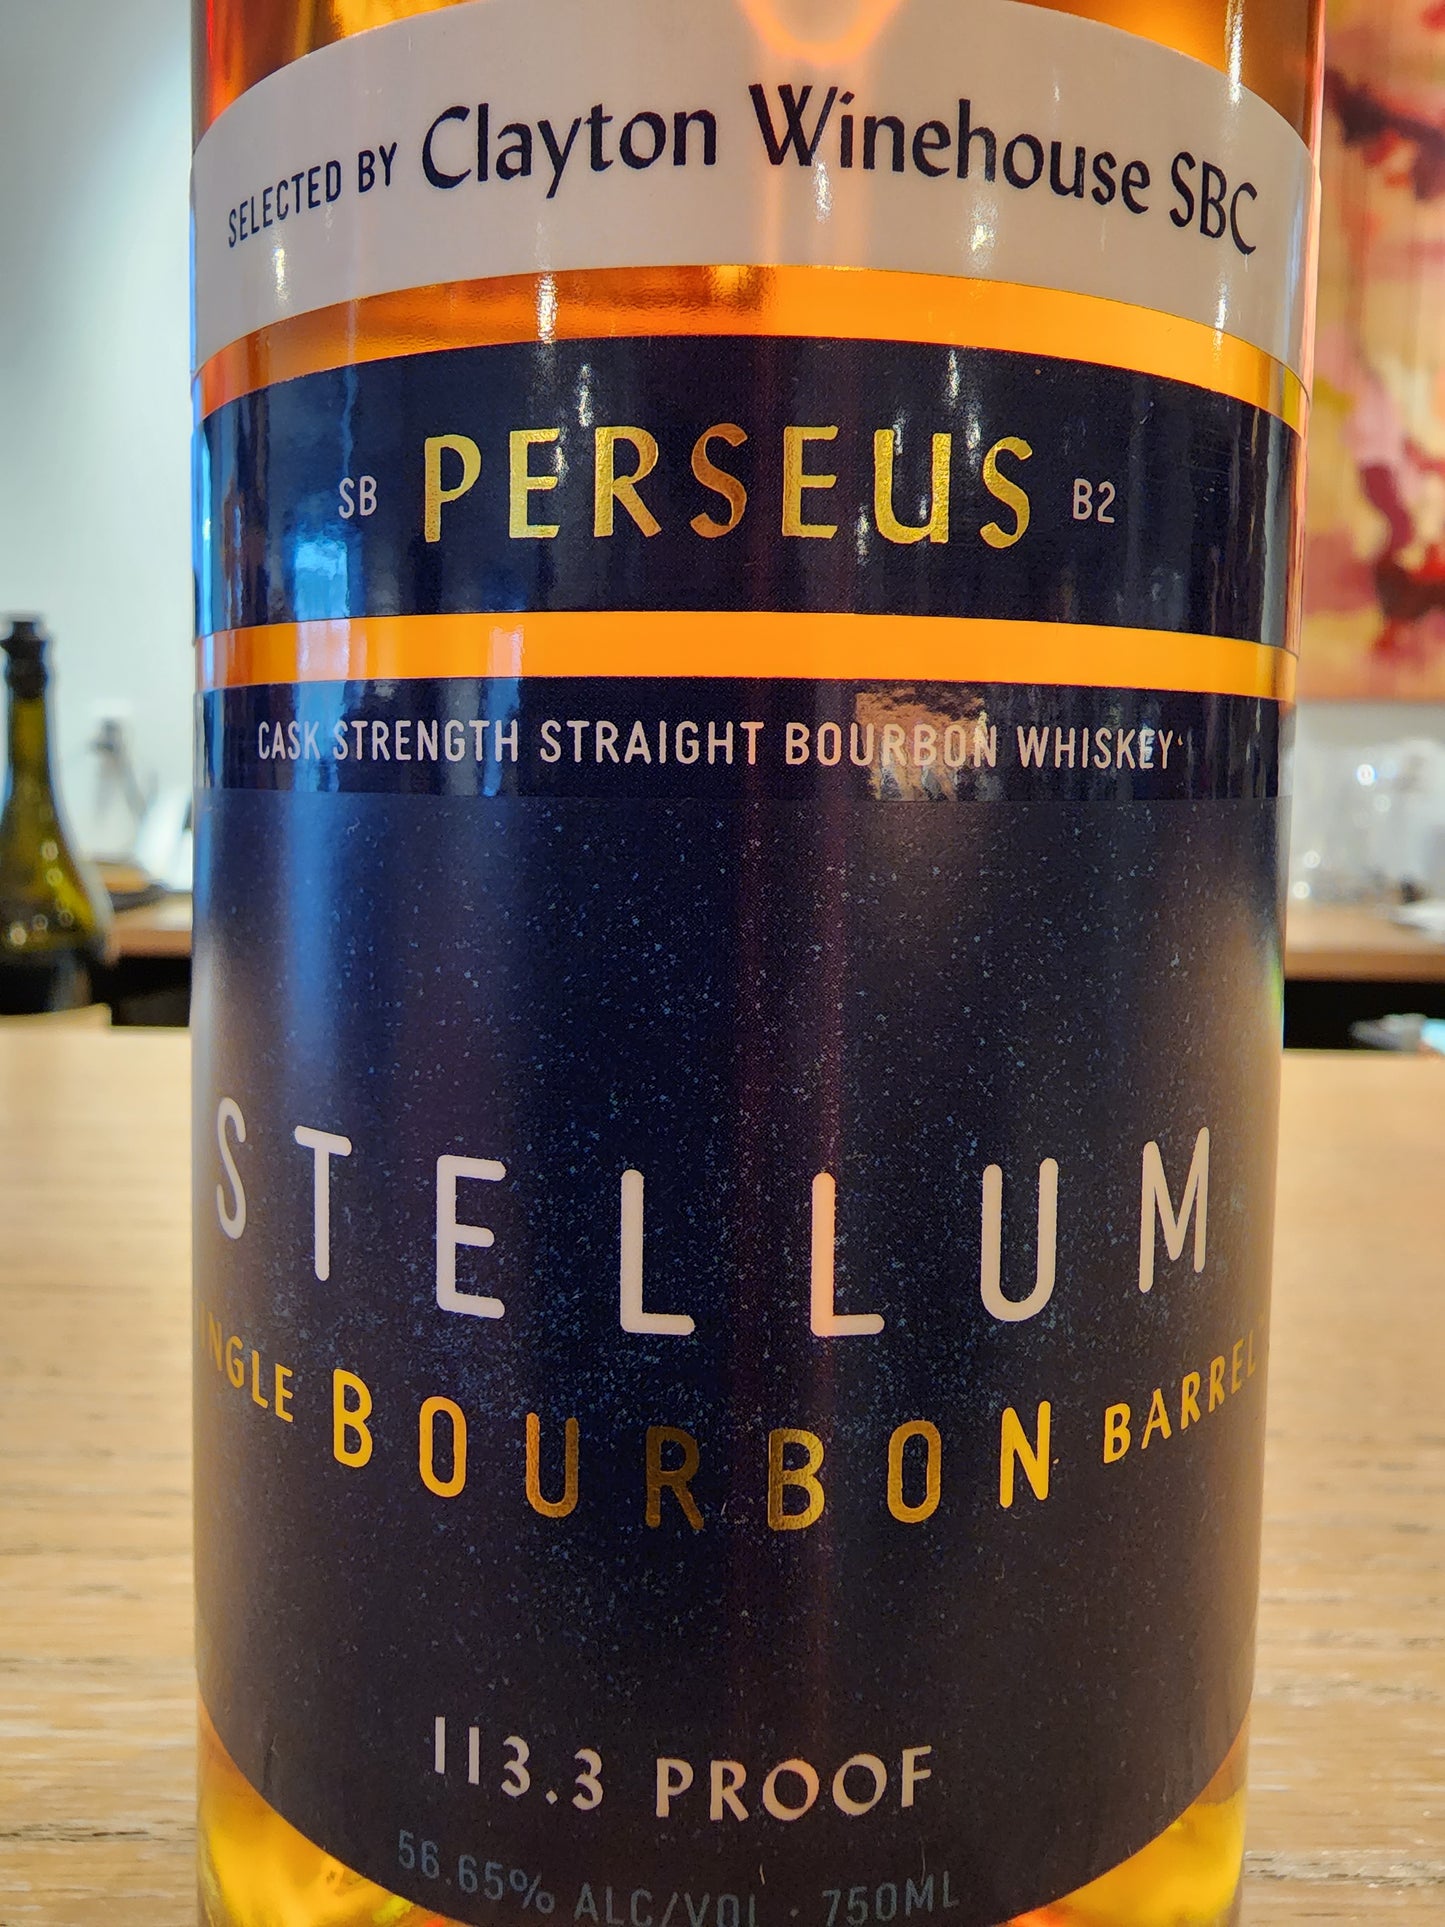 CWH Stellum SB Bourbon Perseus B2